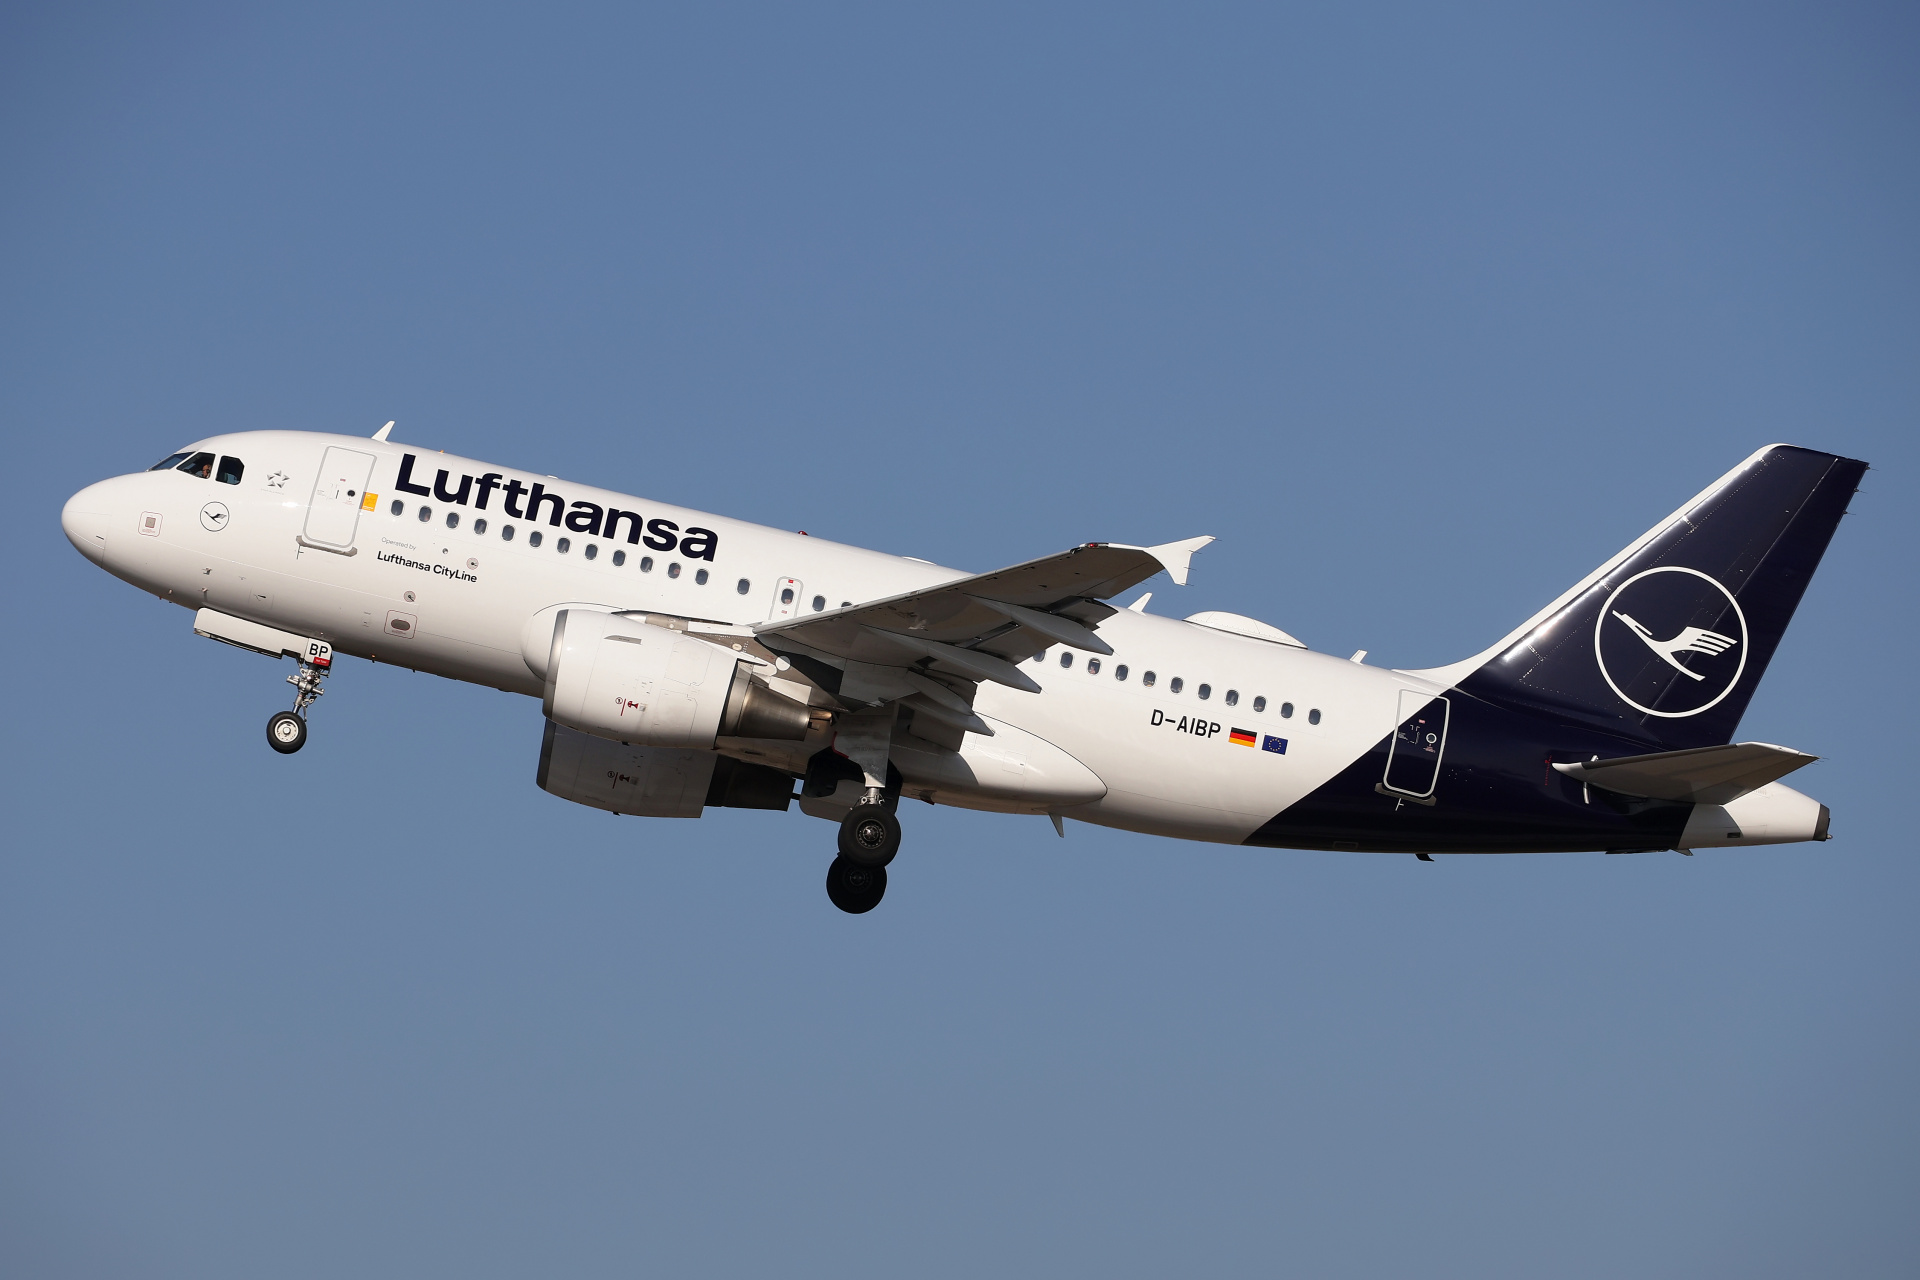 D-AIBP (Lufthansa CityLine) (Aircraft » EPWA Spotting » Airbus A319-100 » Lufthansa)